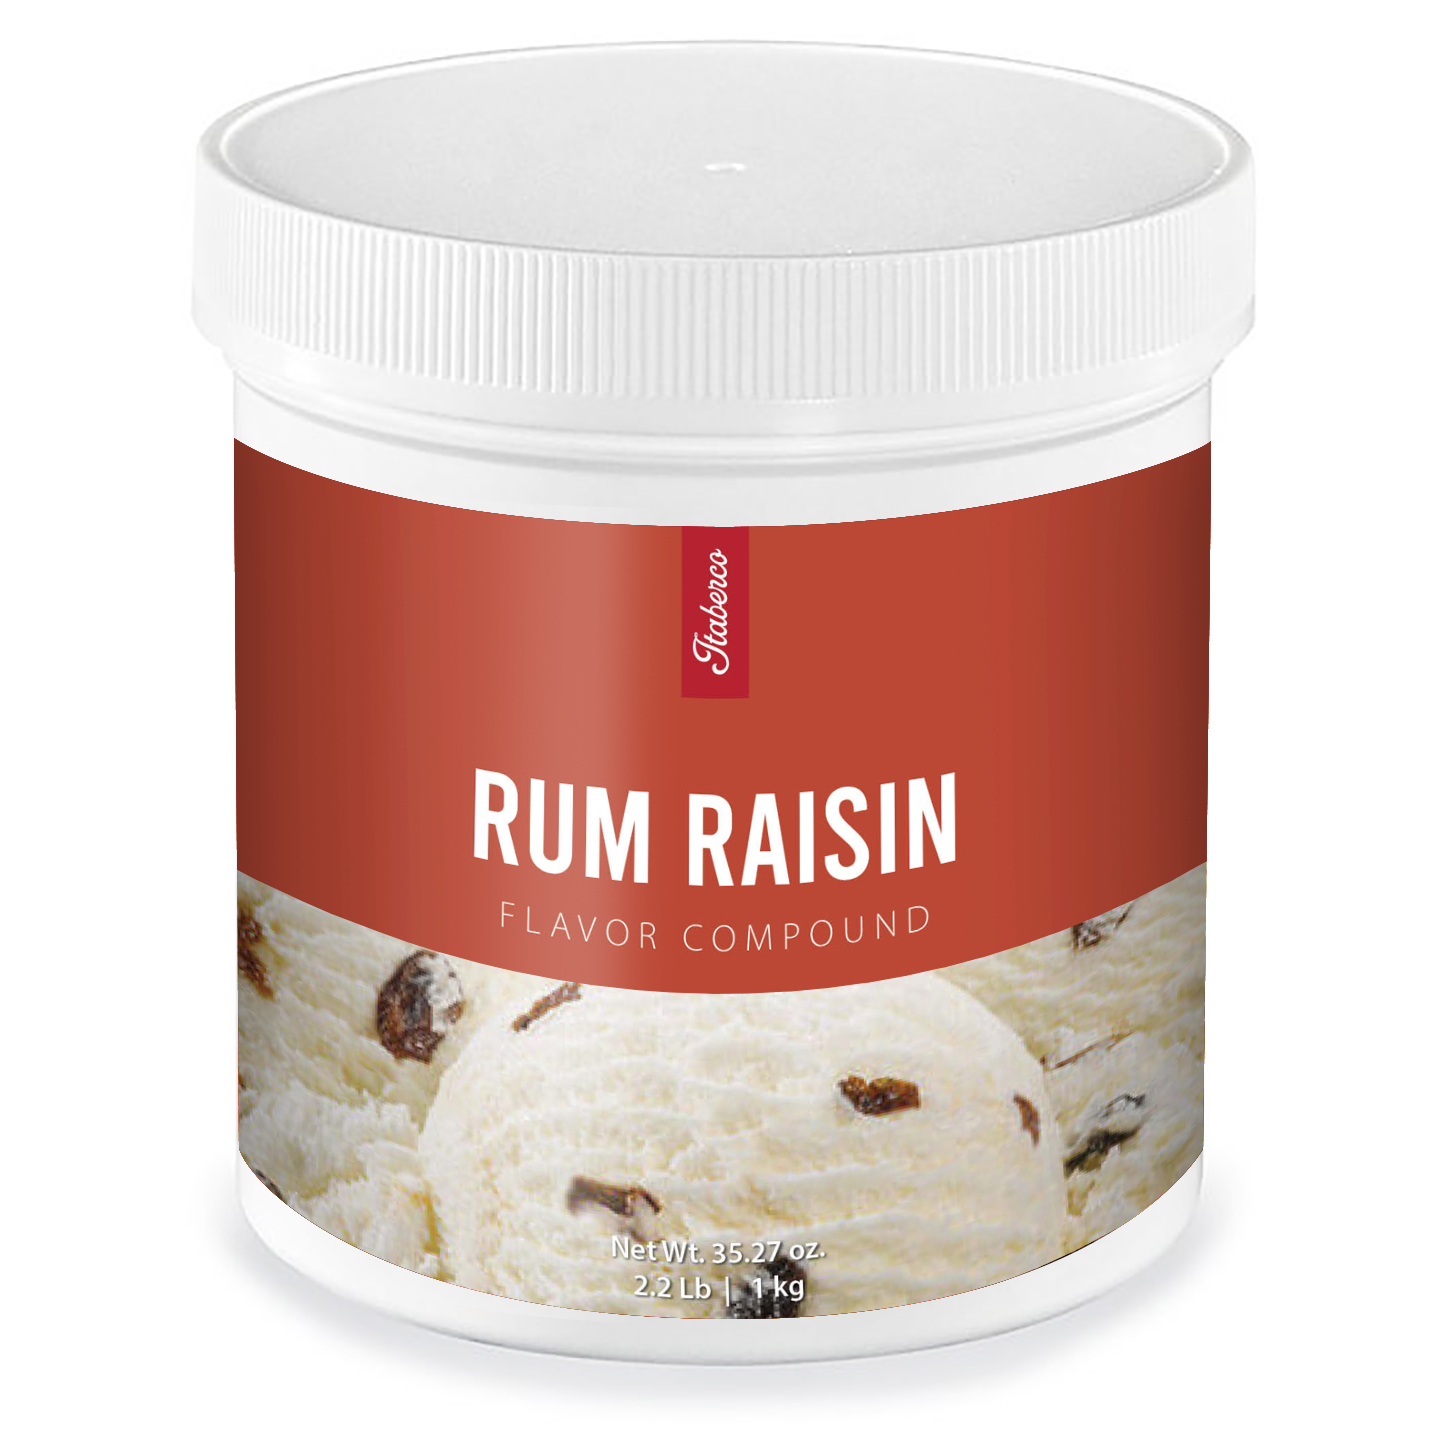 Rum Raisin Flavor Compound